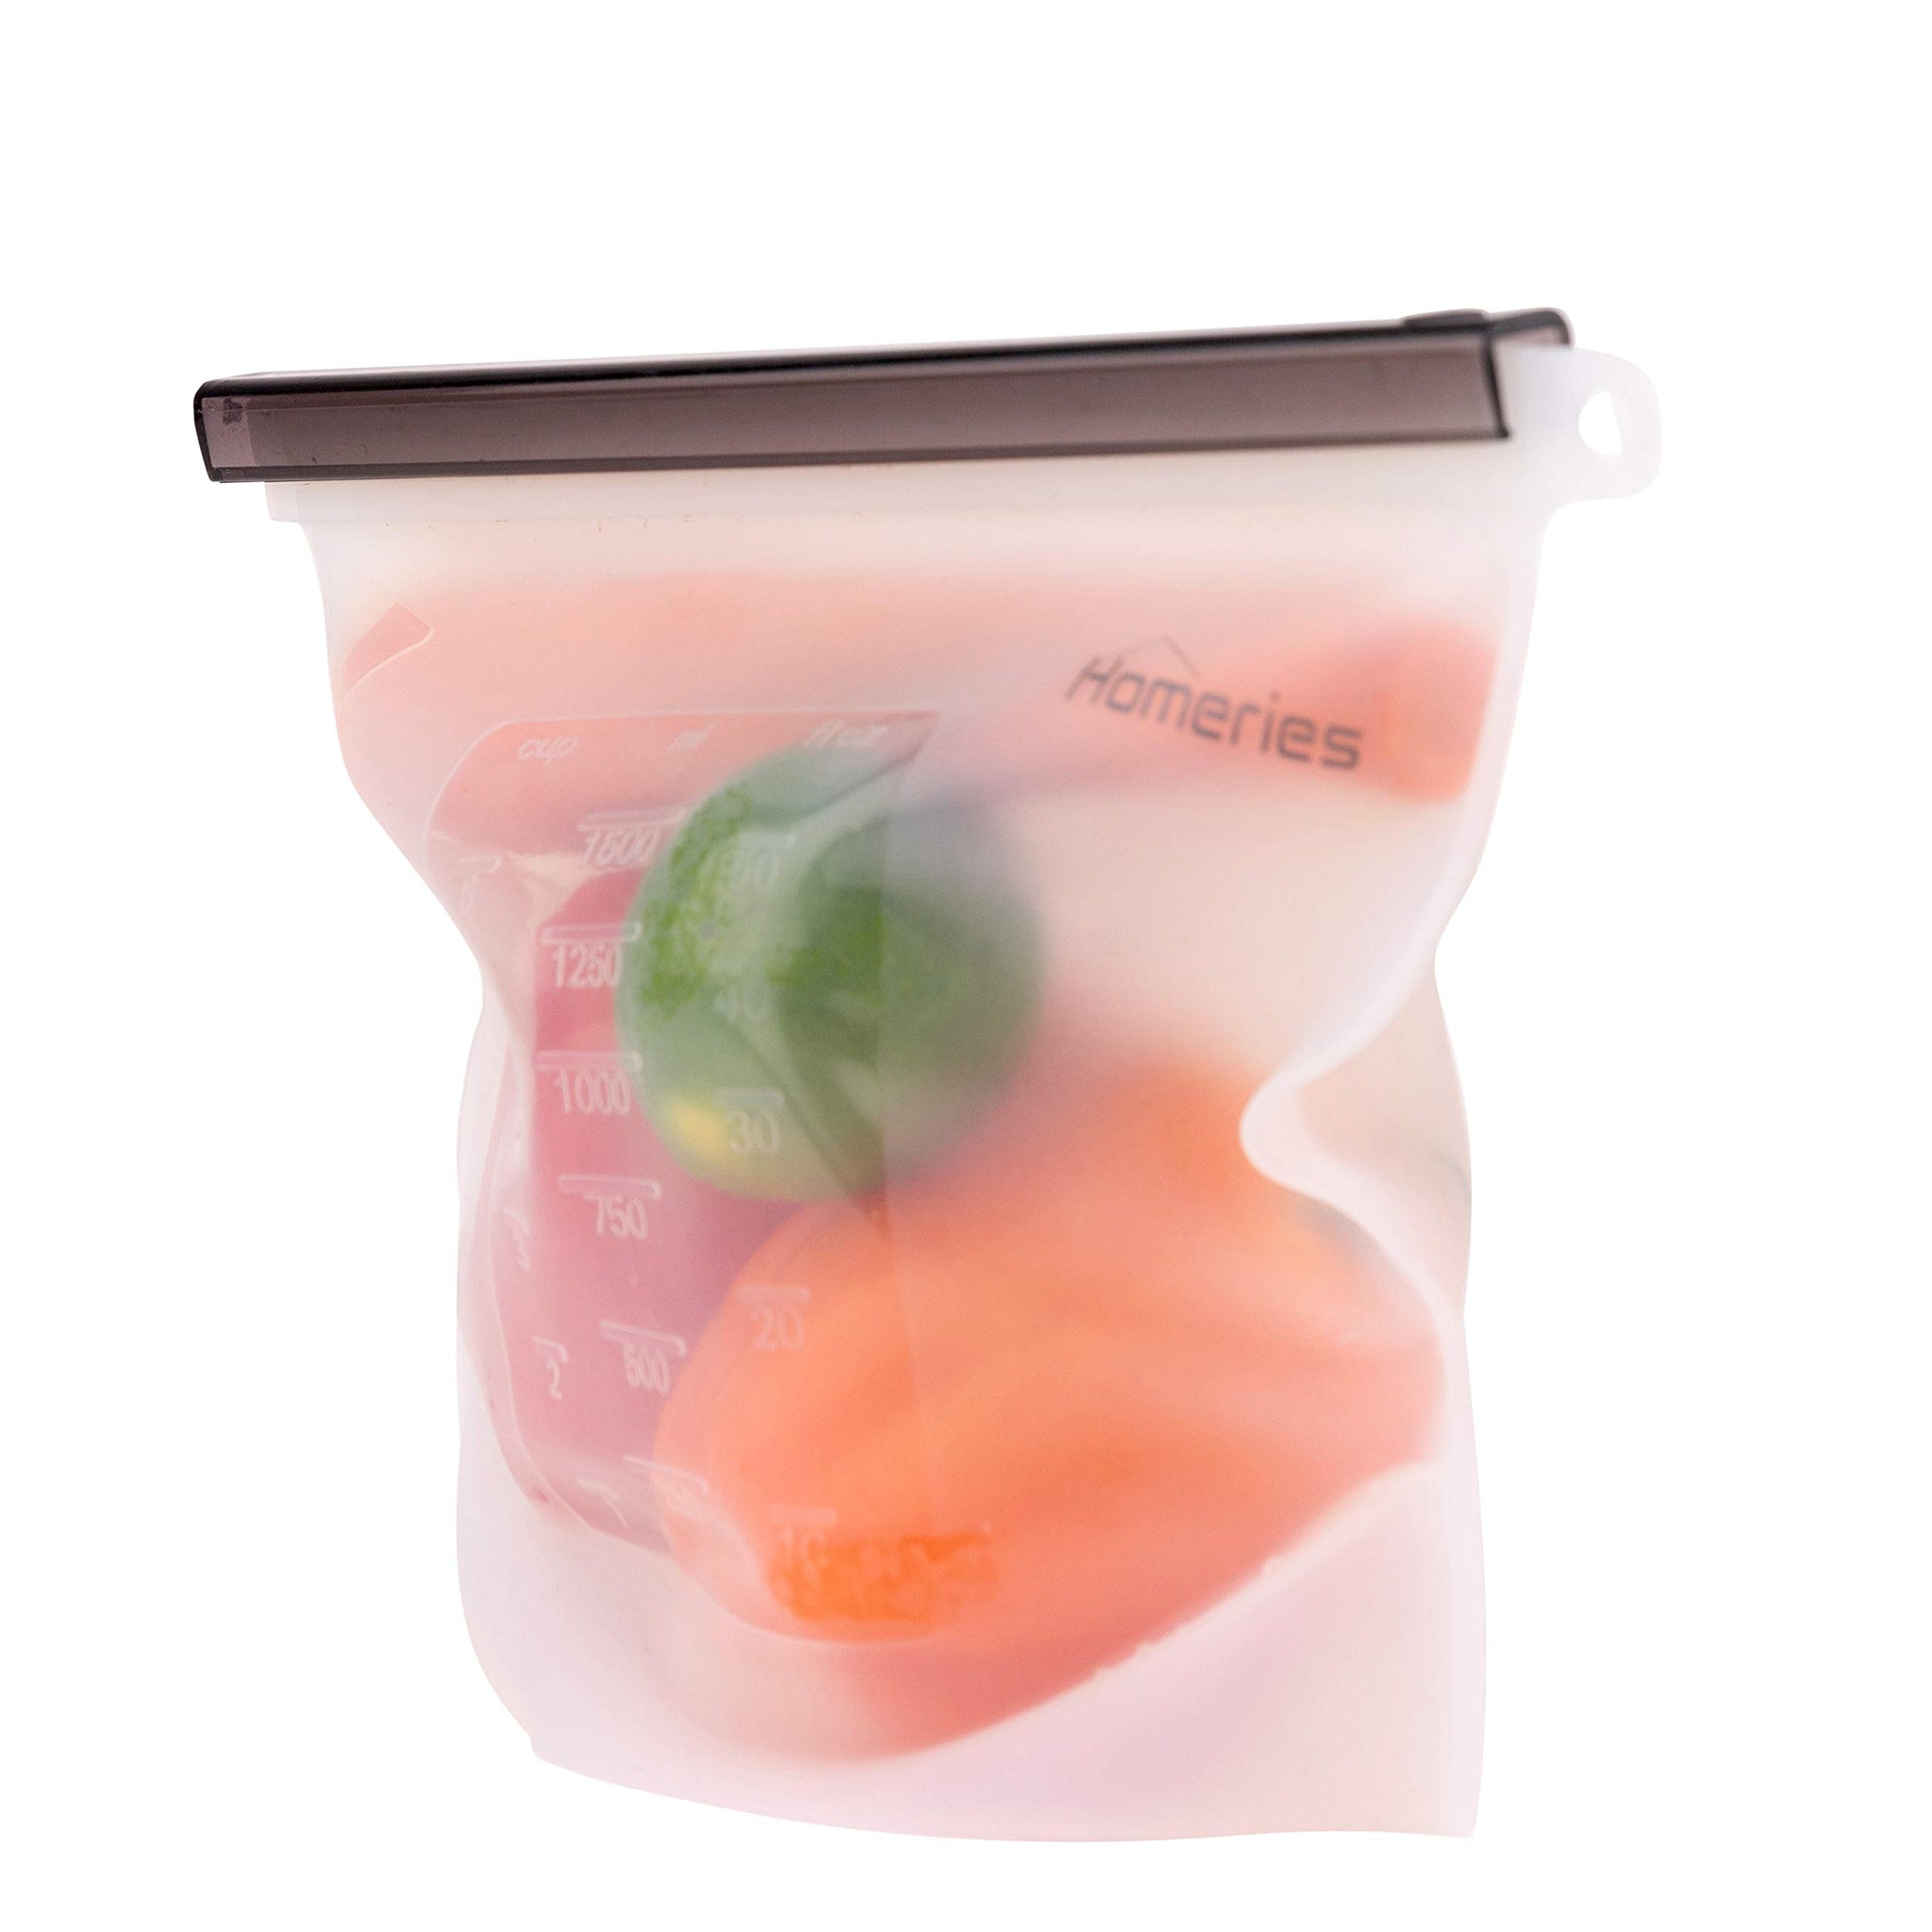 Reusable Silicone Food Storage Bags (3 Large + 4 Medium) – Homelux